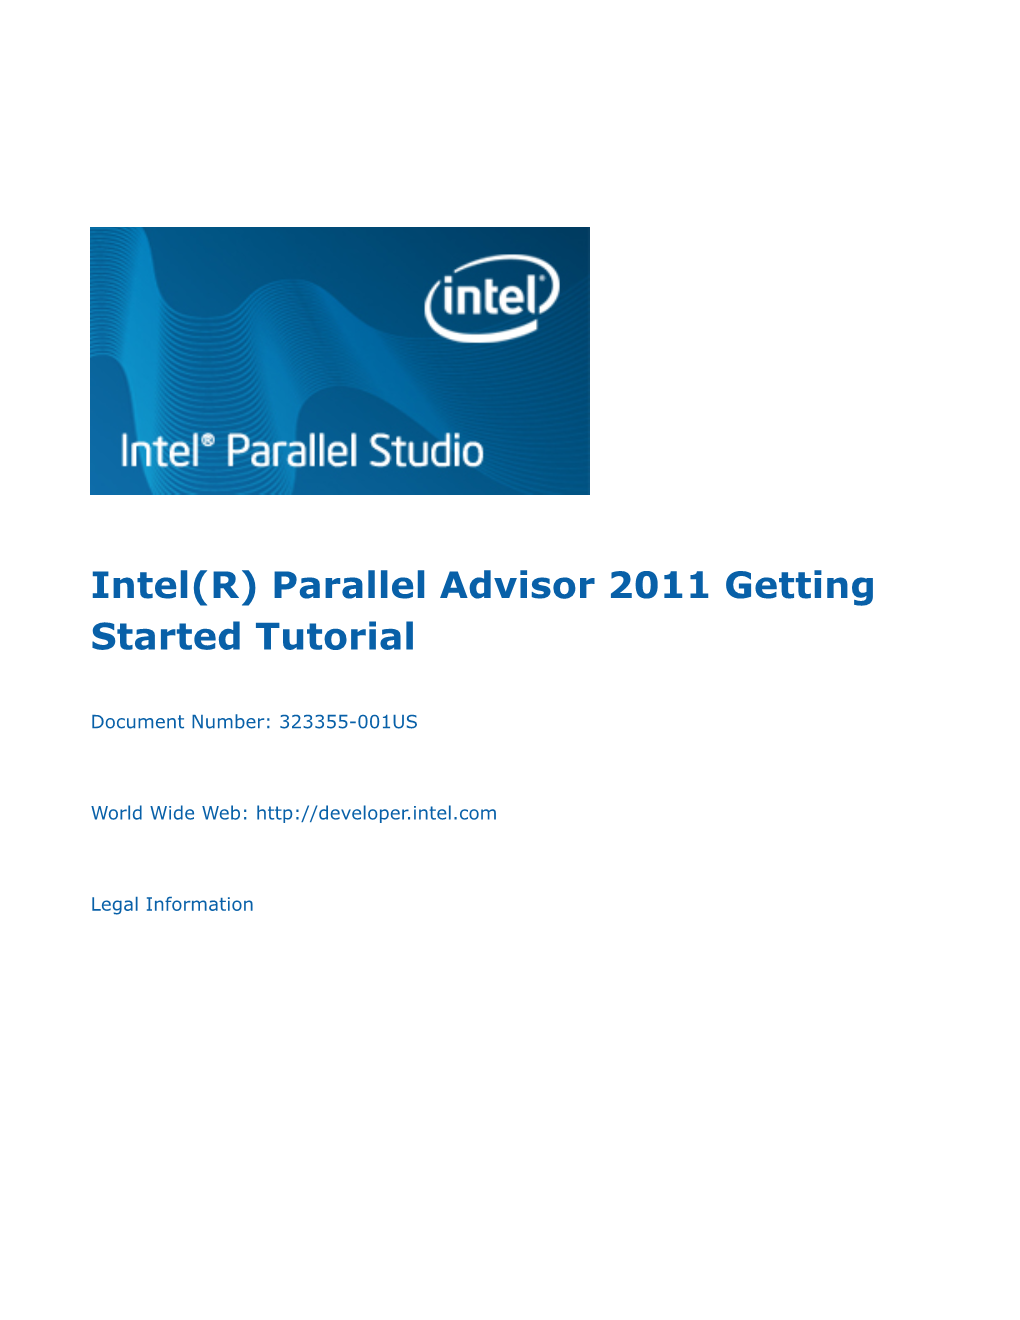 Intel(R) Parallel Advisor 2011 Getting Started Tutorial